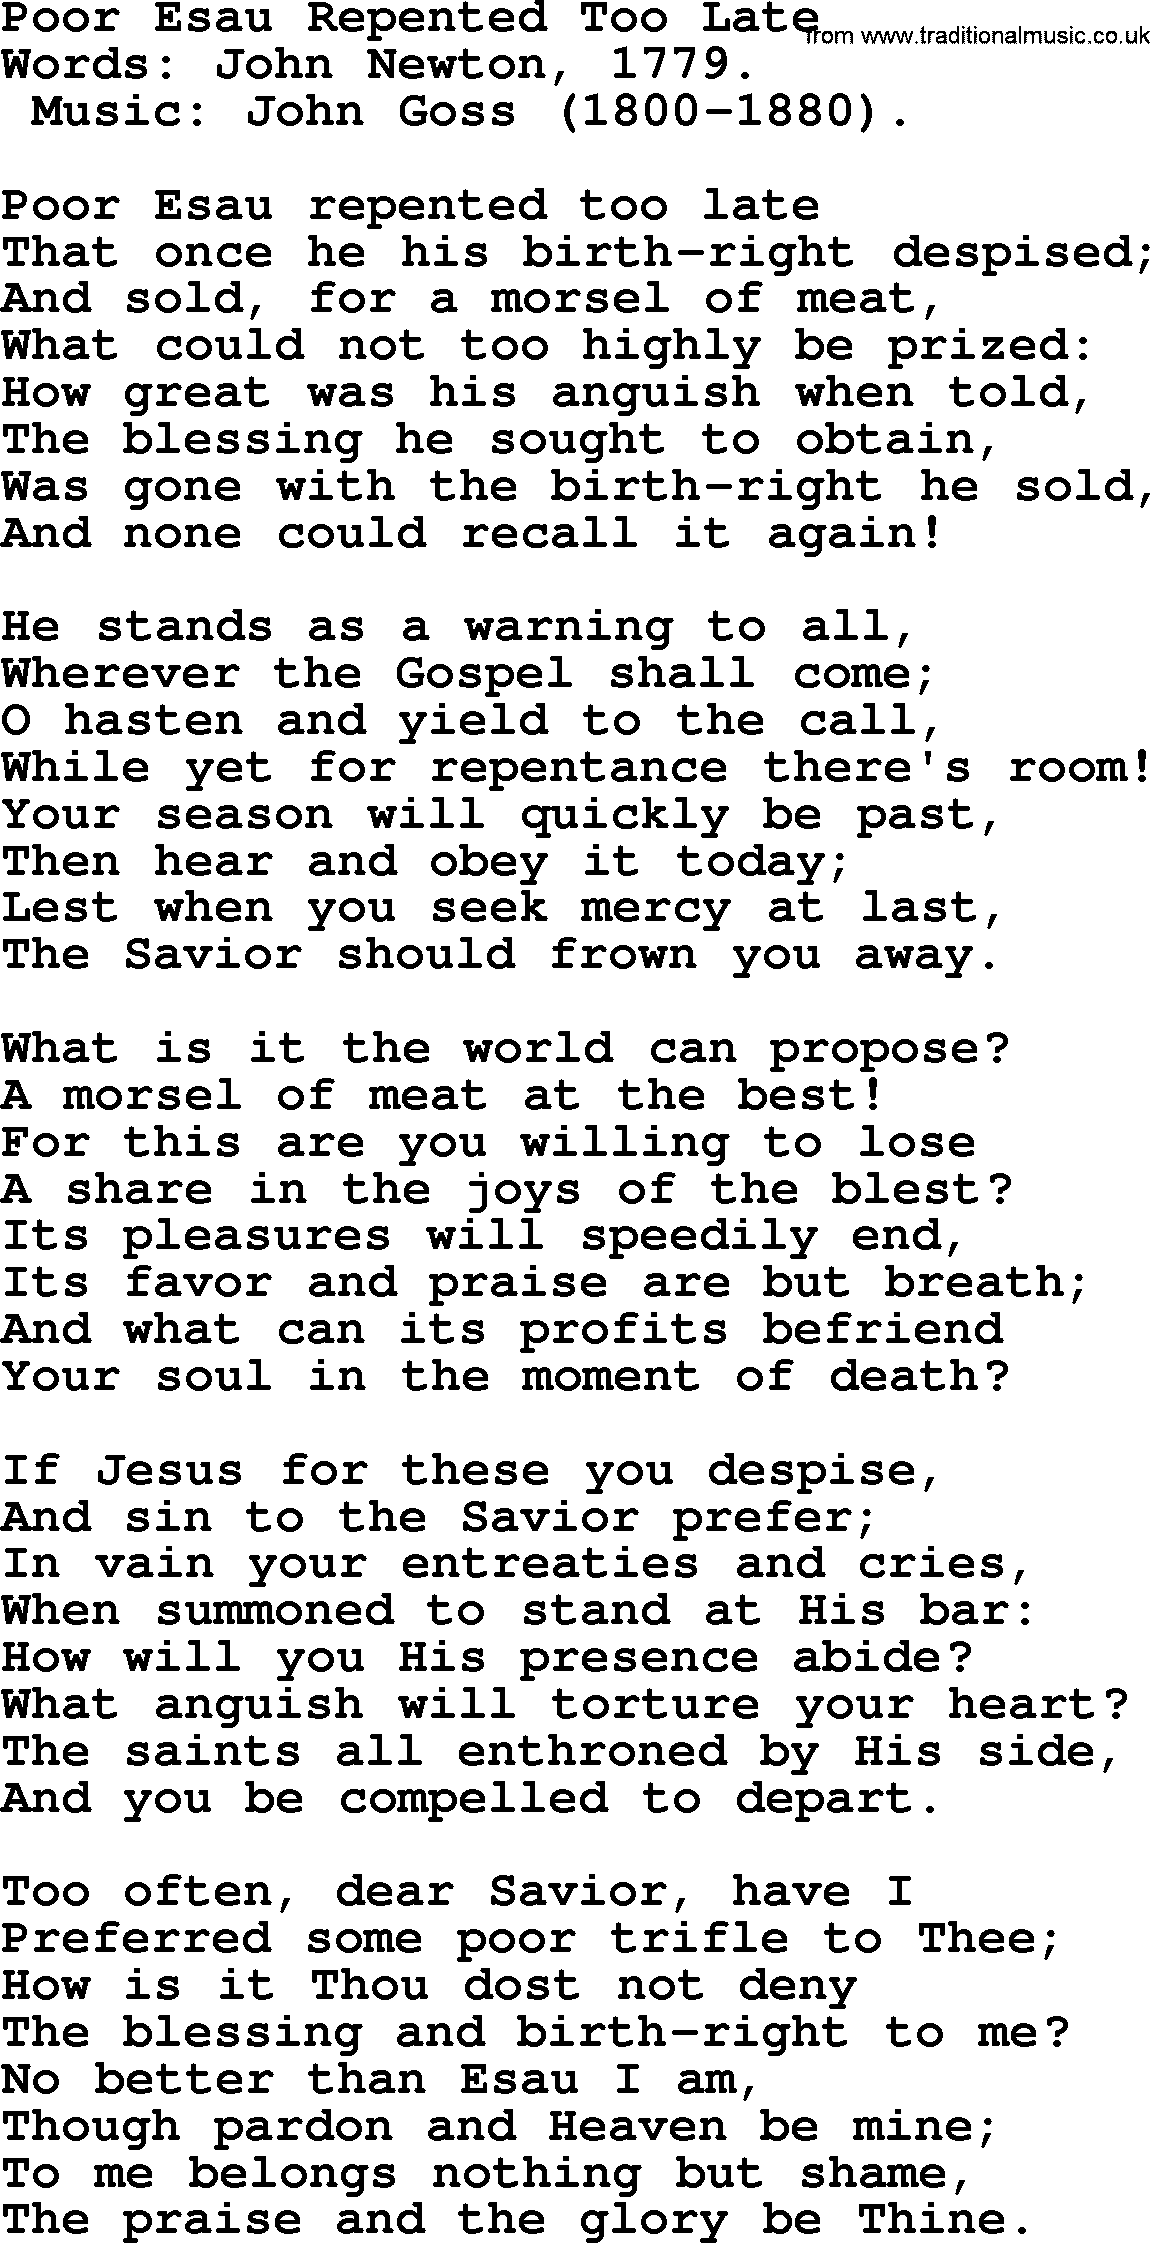 John Newton hymn: Poor Esau Repented Too Late, lyrics